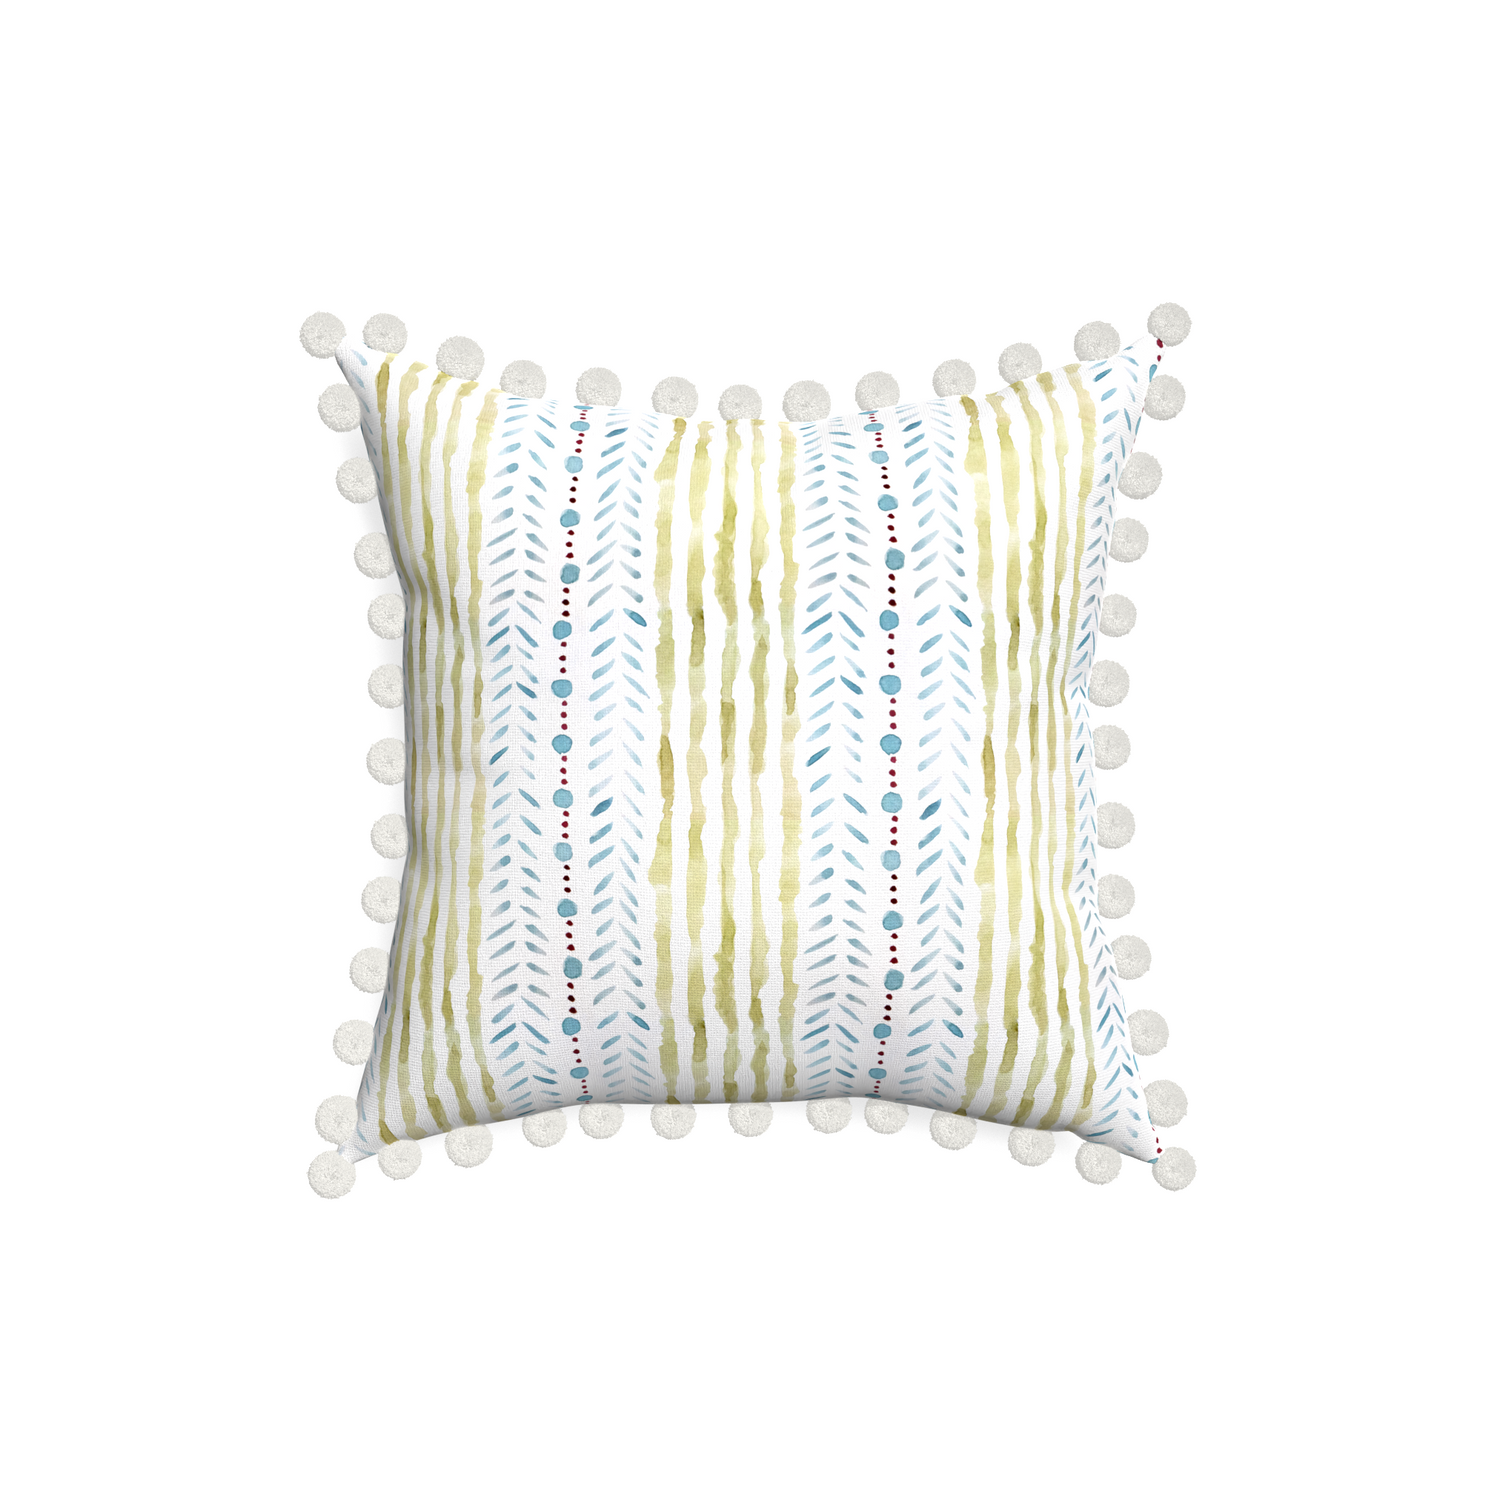 18-square julia custom pillow with snow pom pom on white background